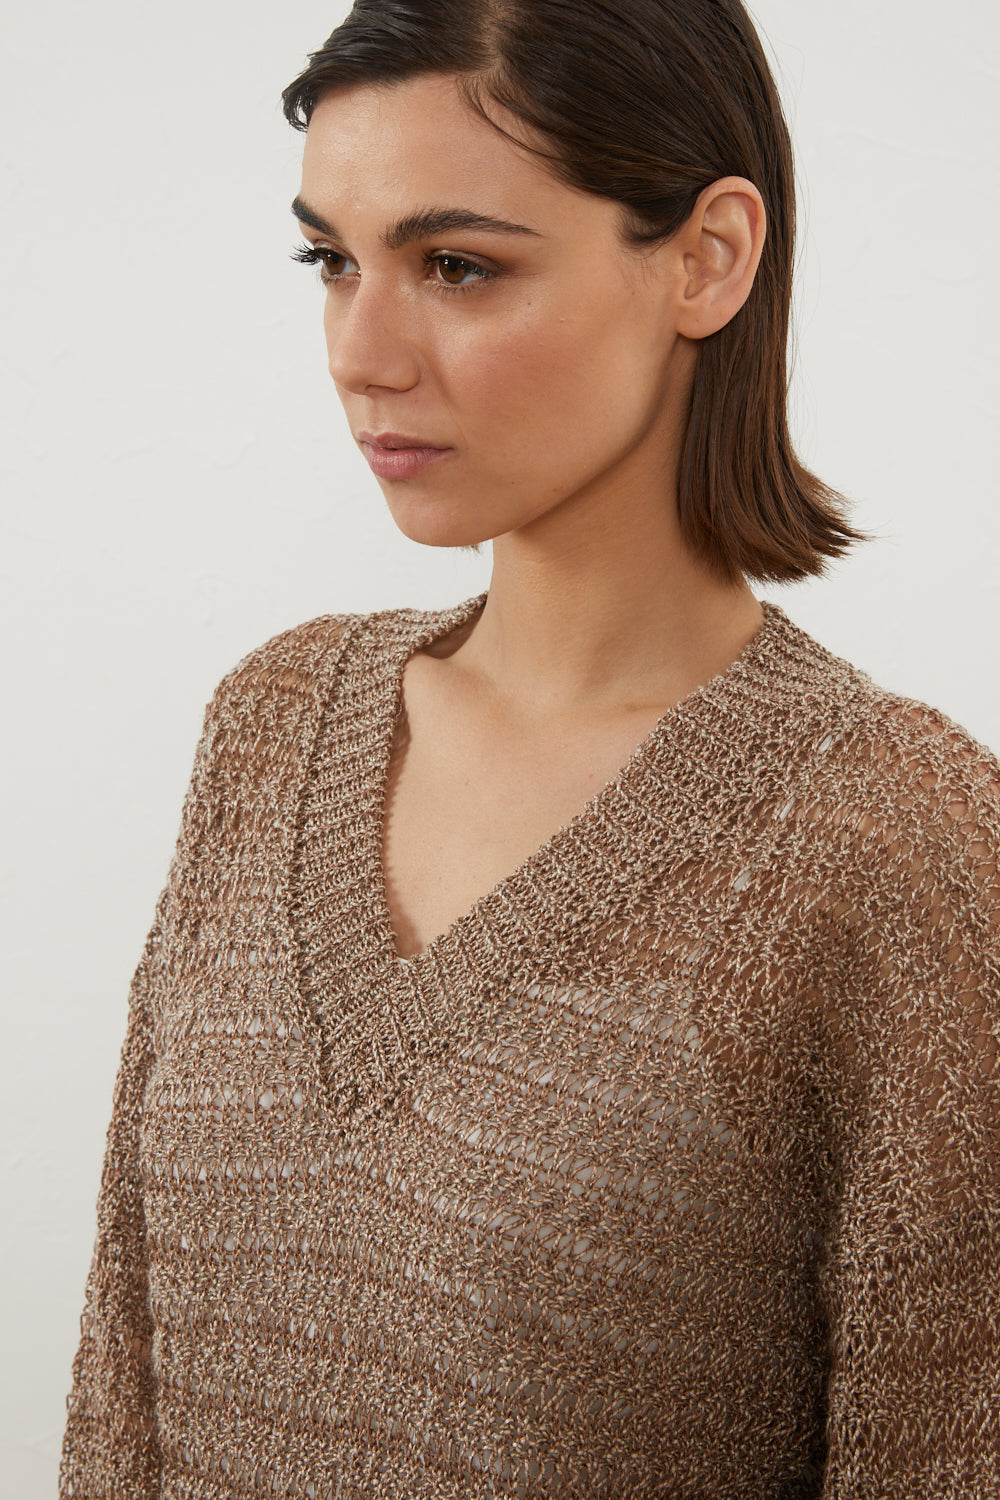 terracotta linen knit sweater